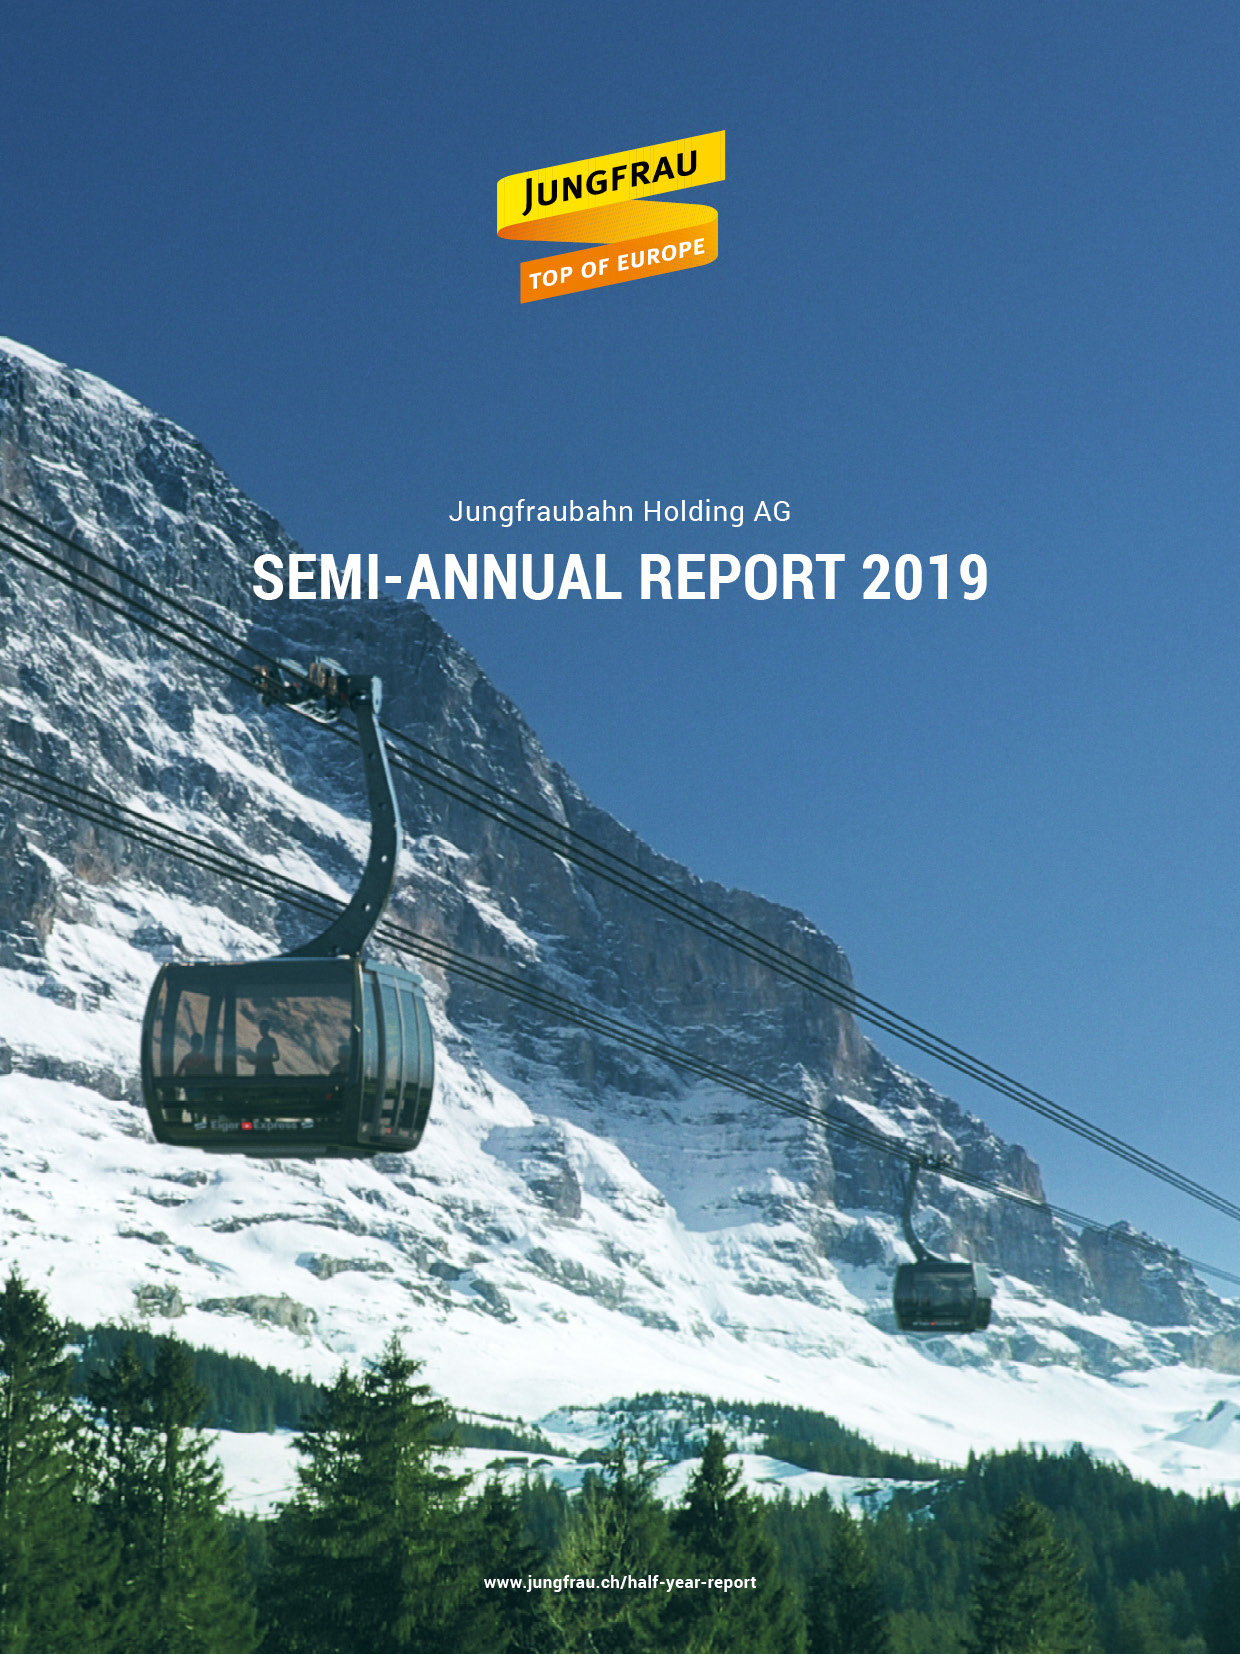 2019 semi-annual report of Jungfraubahn Holding AG